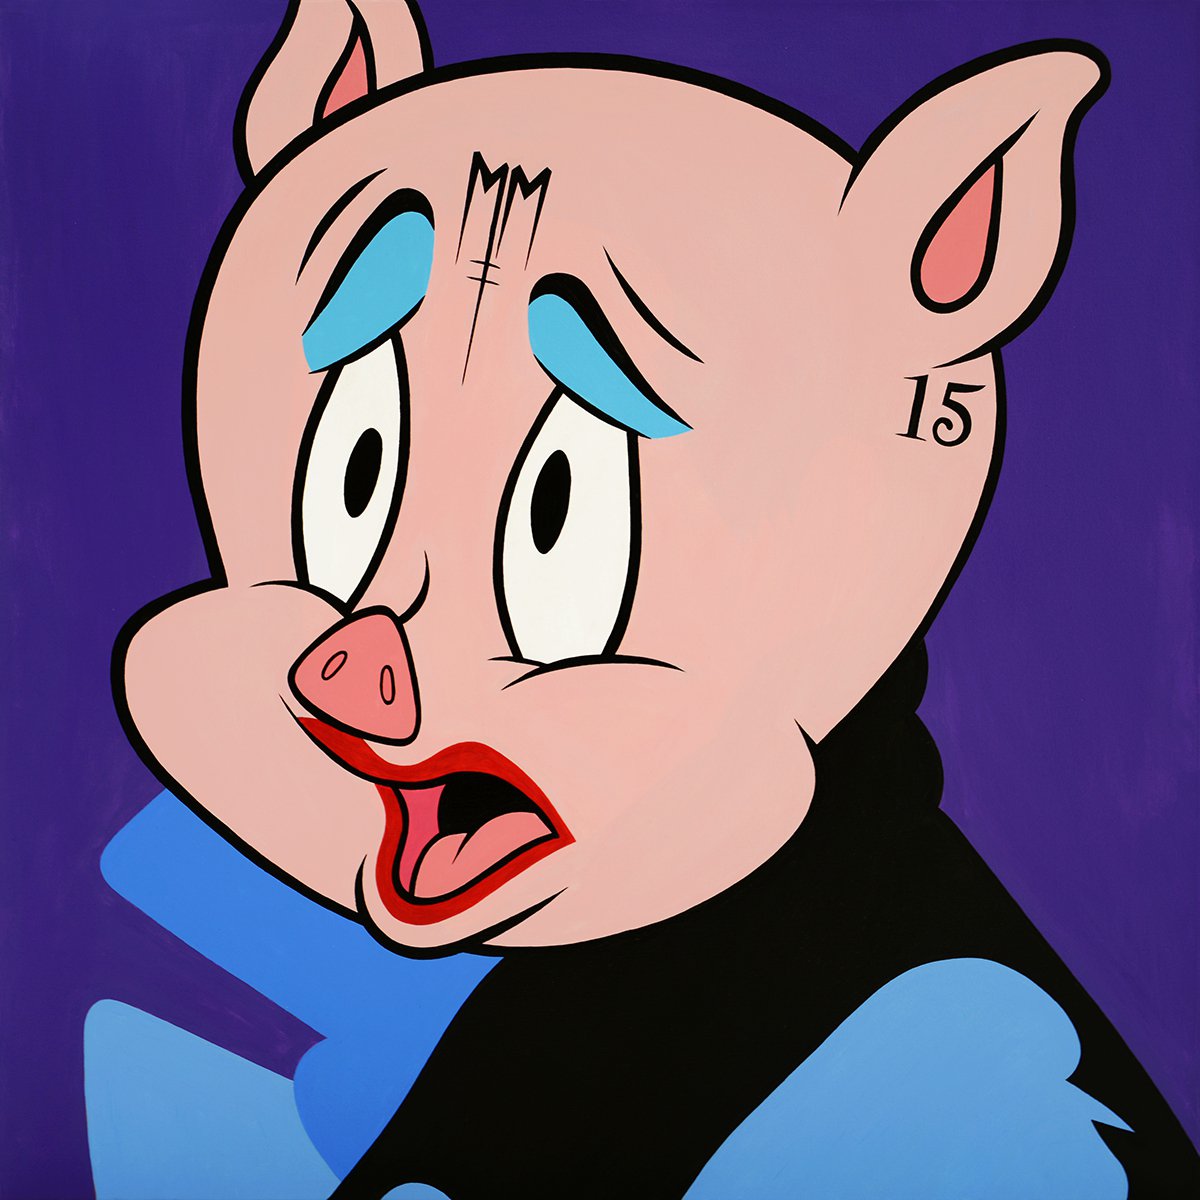 Lipstick On A Pig by Pop Art Australia